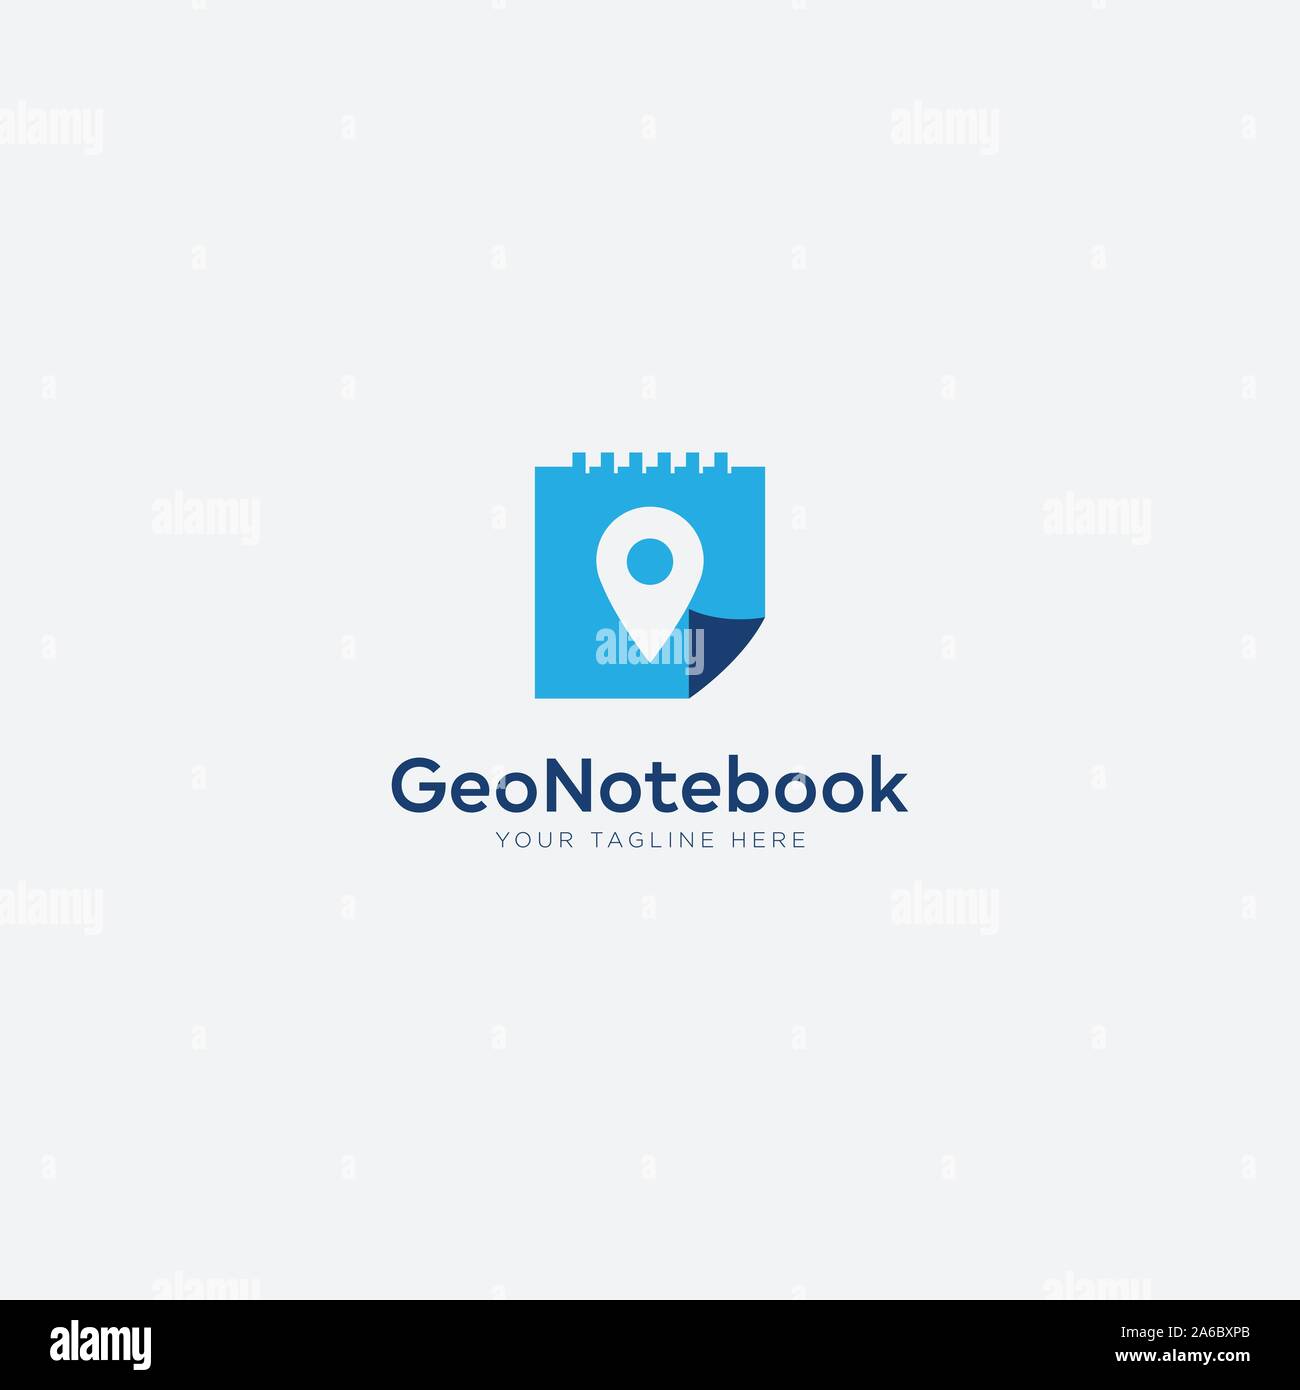 Geo logo per notebook con terra blu e note Illustrazione Vettoriale